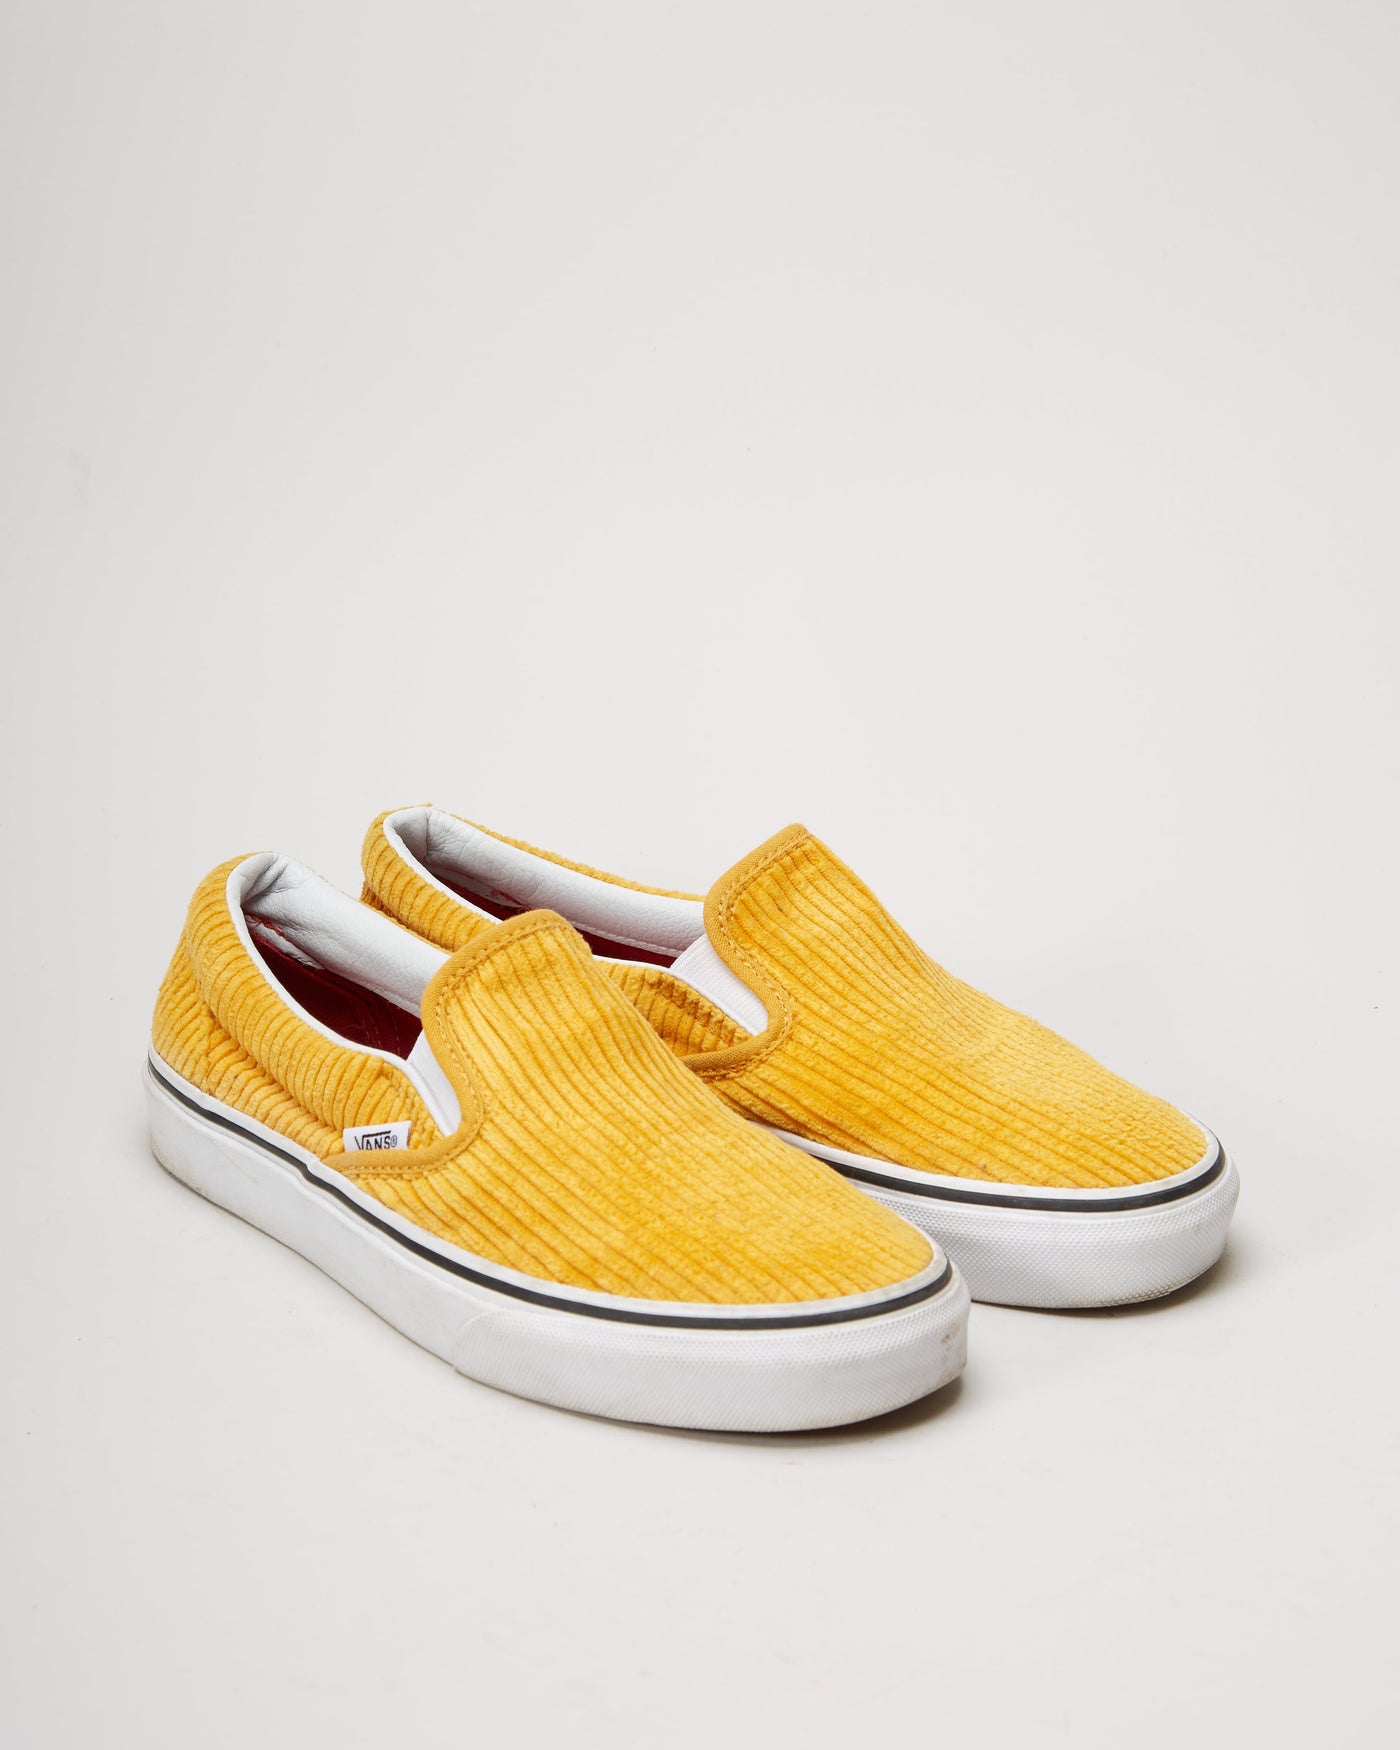 Vans Yellow Corduroy Canvas Shoes - UK 4.5